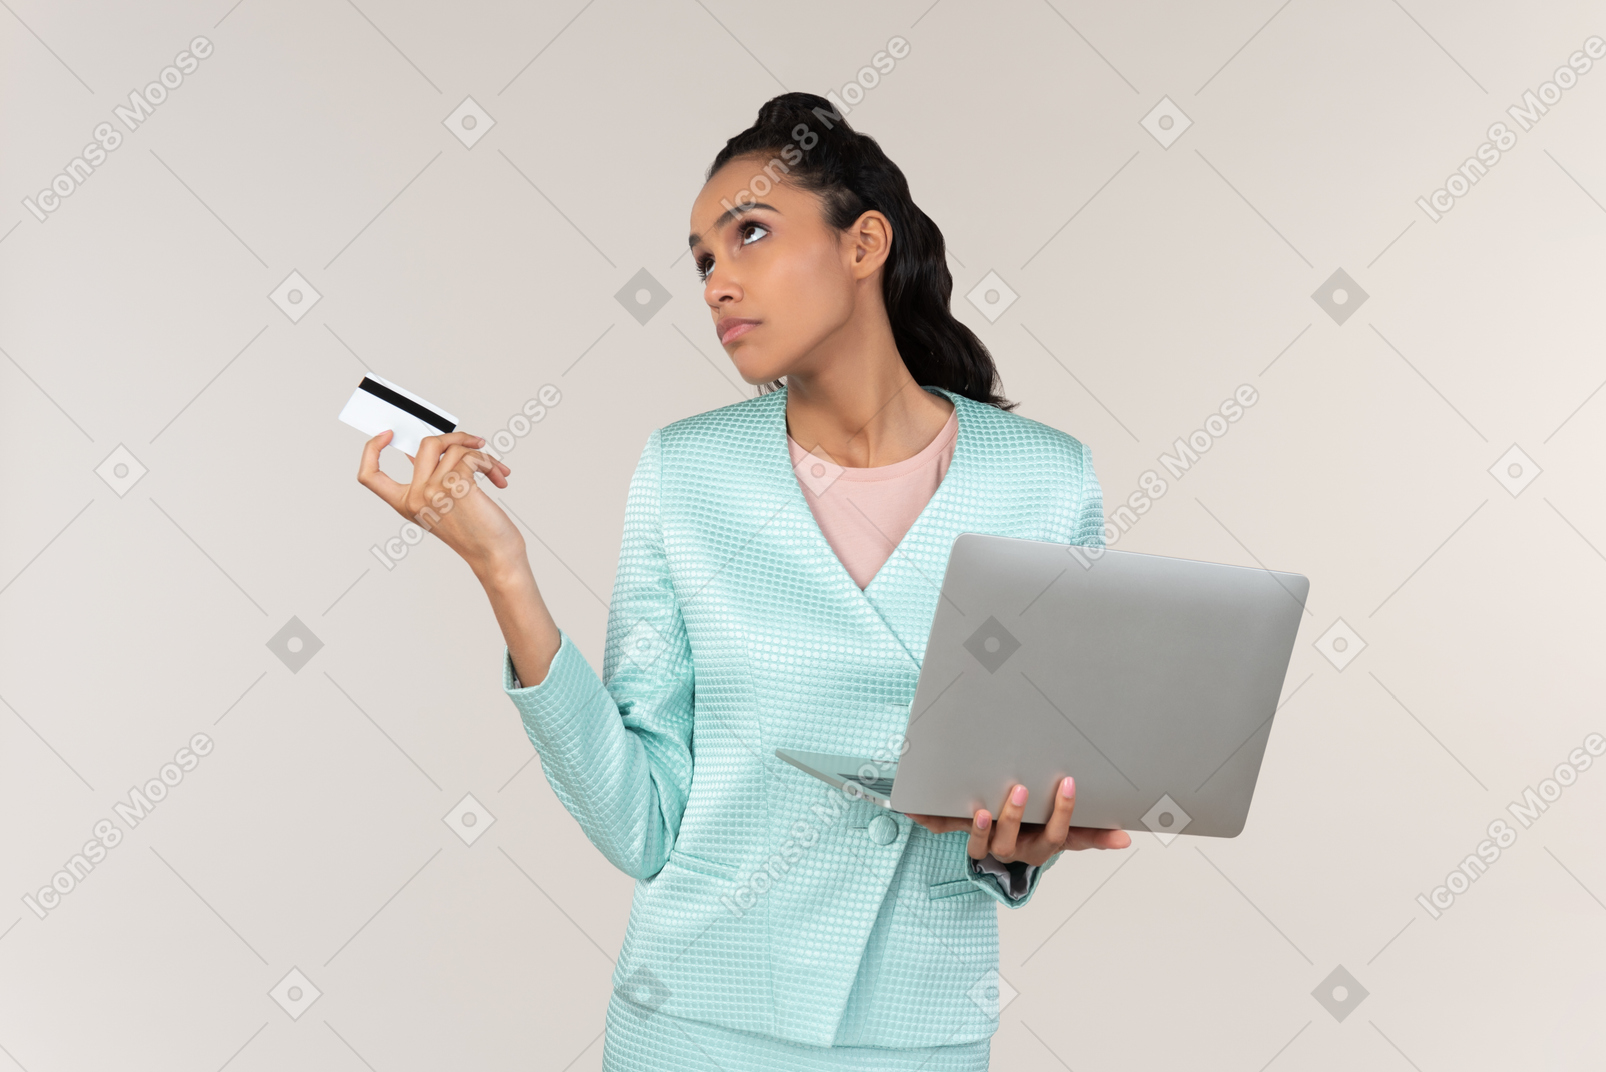 Joven afrowoman pensativa con laptop y tarjeta bancaria